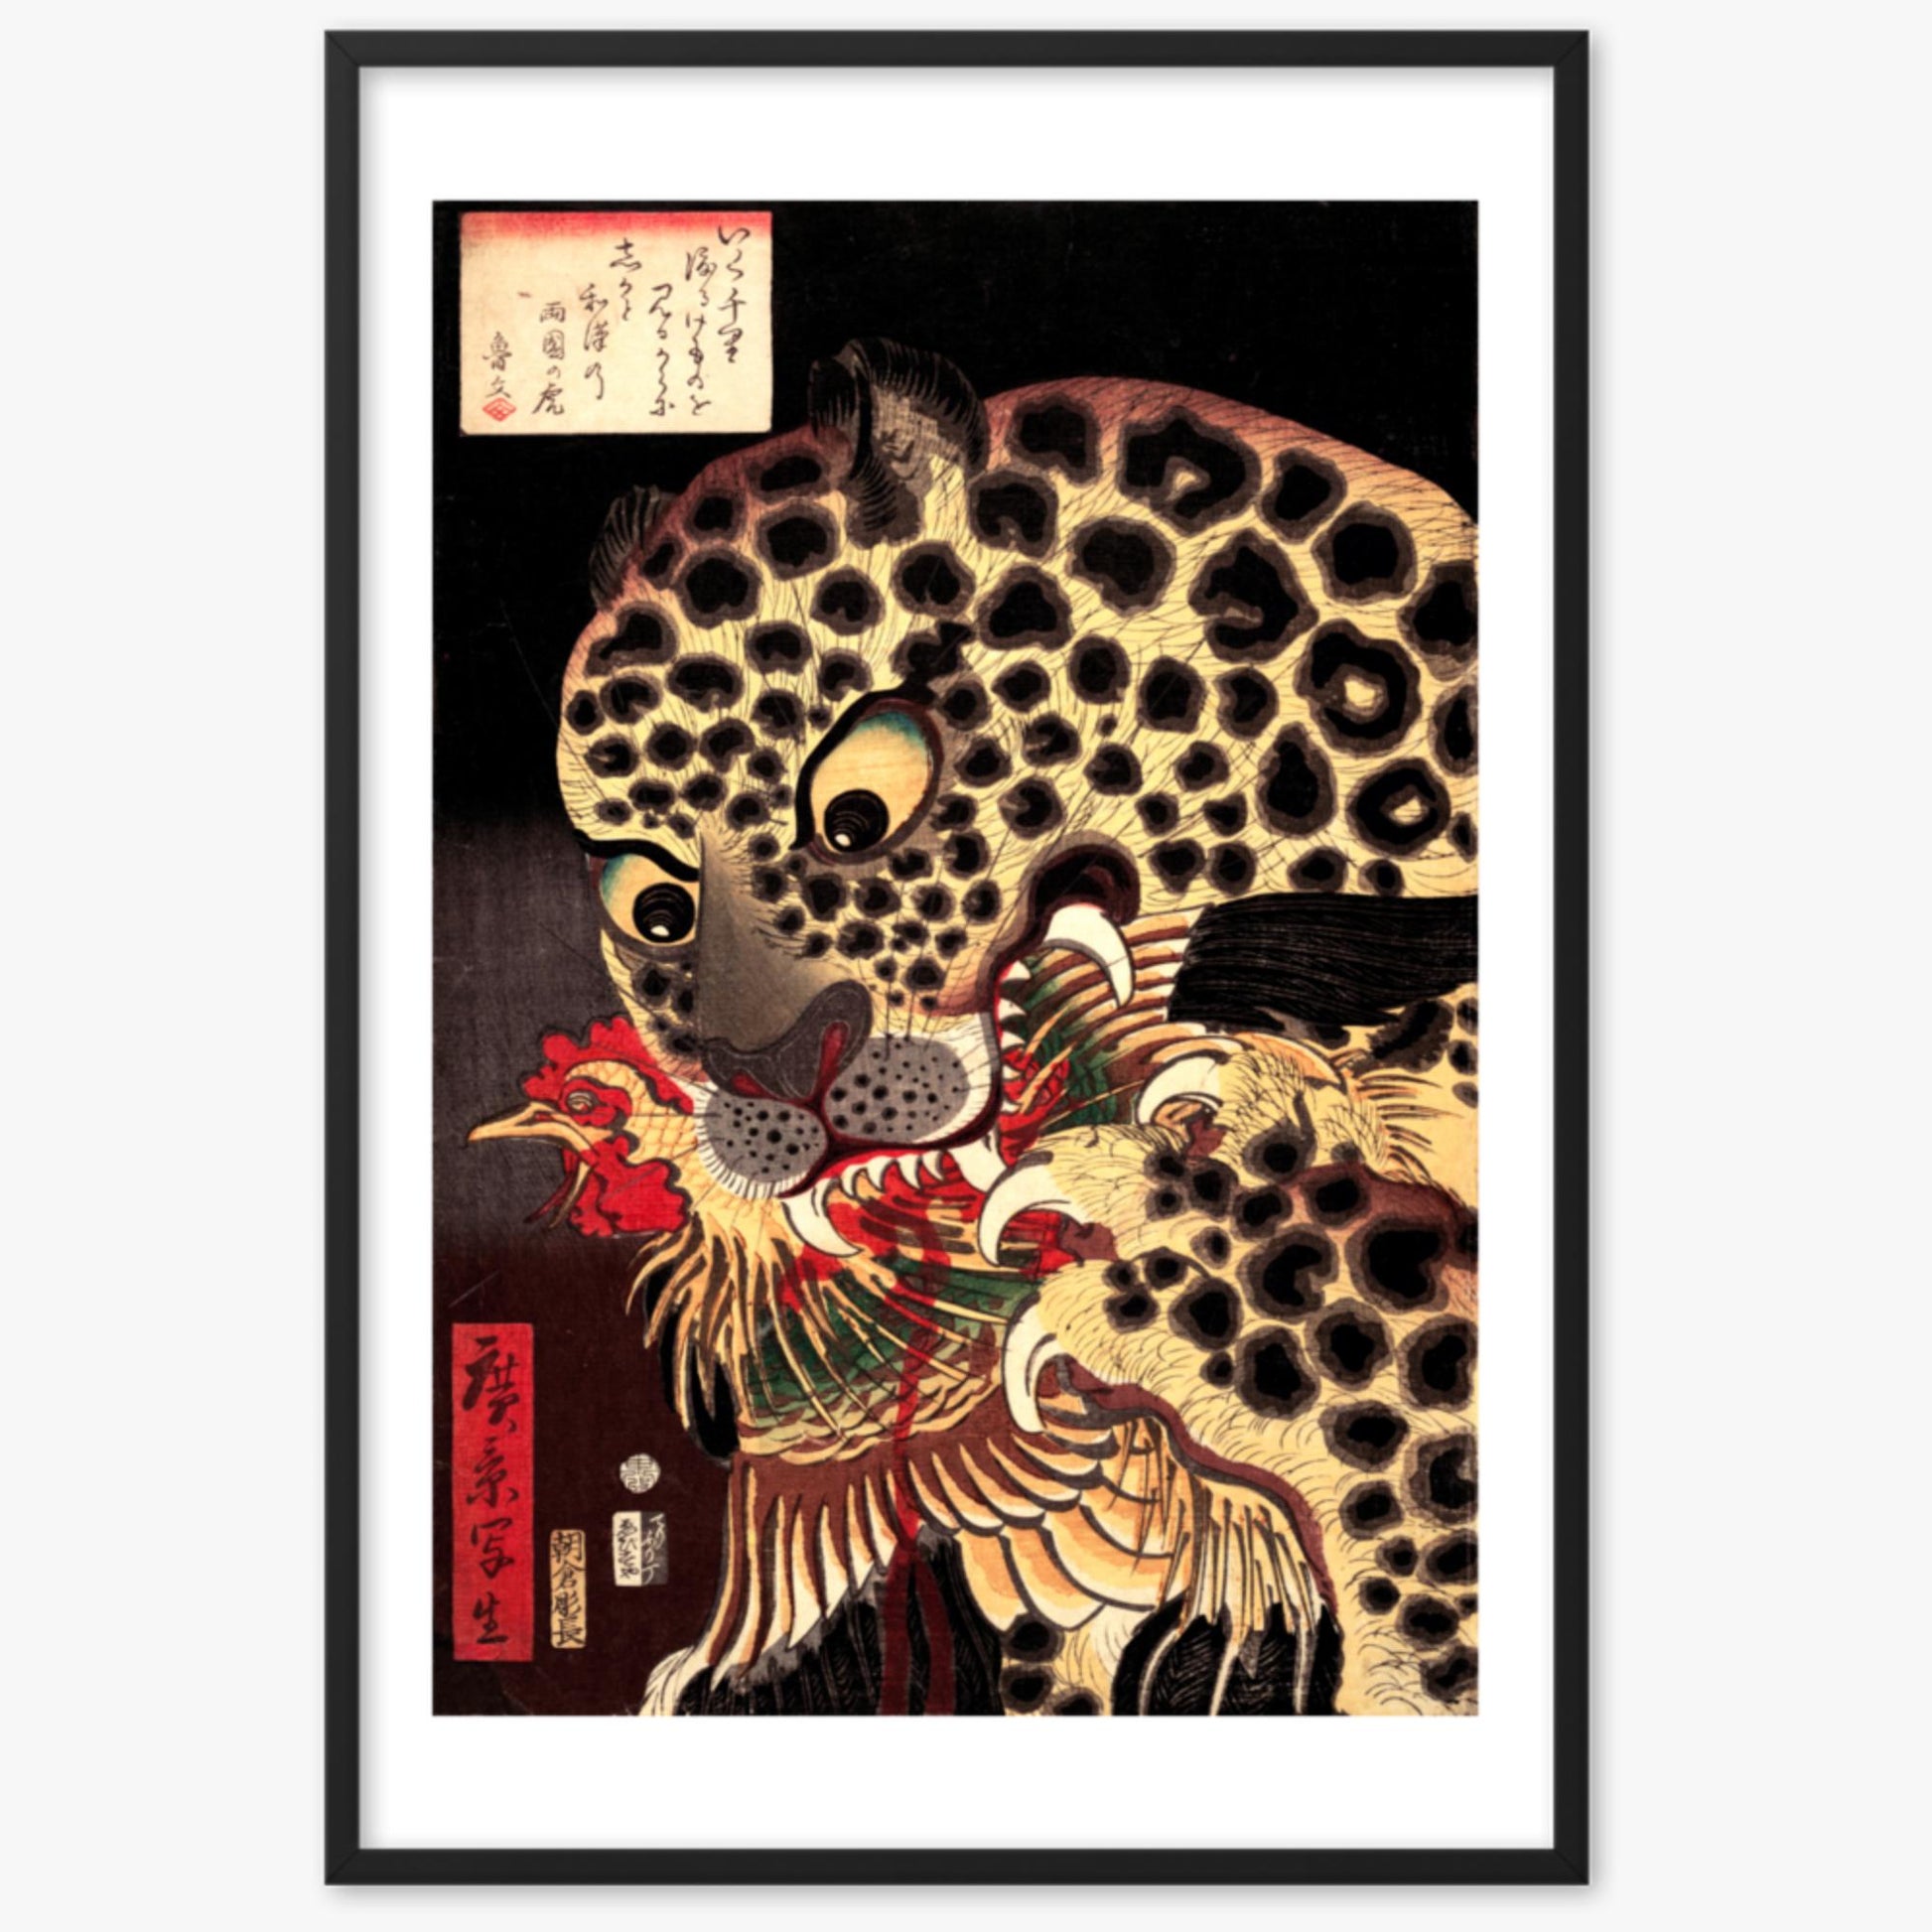 Utagawa Hirokage - The Tiger of Ryōkoku 61x91 cm Poster With Black Frame